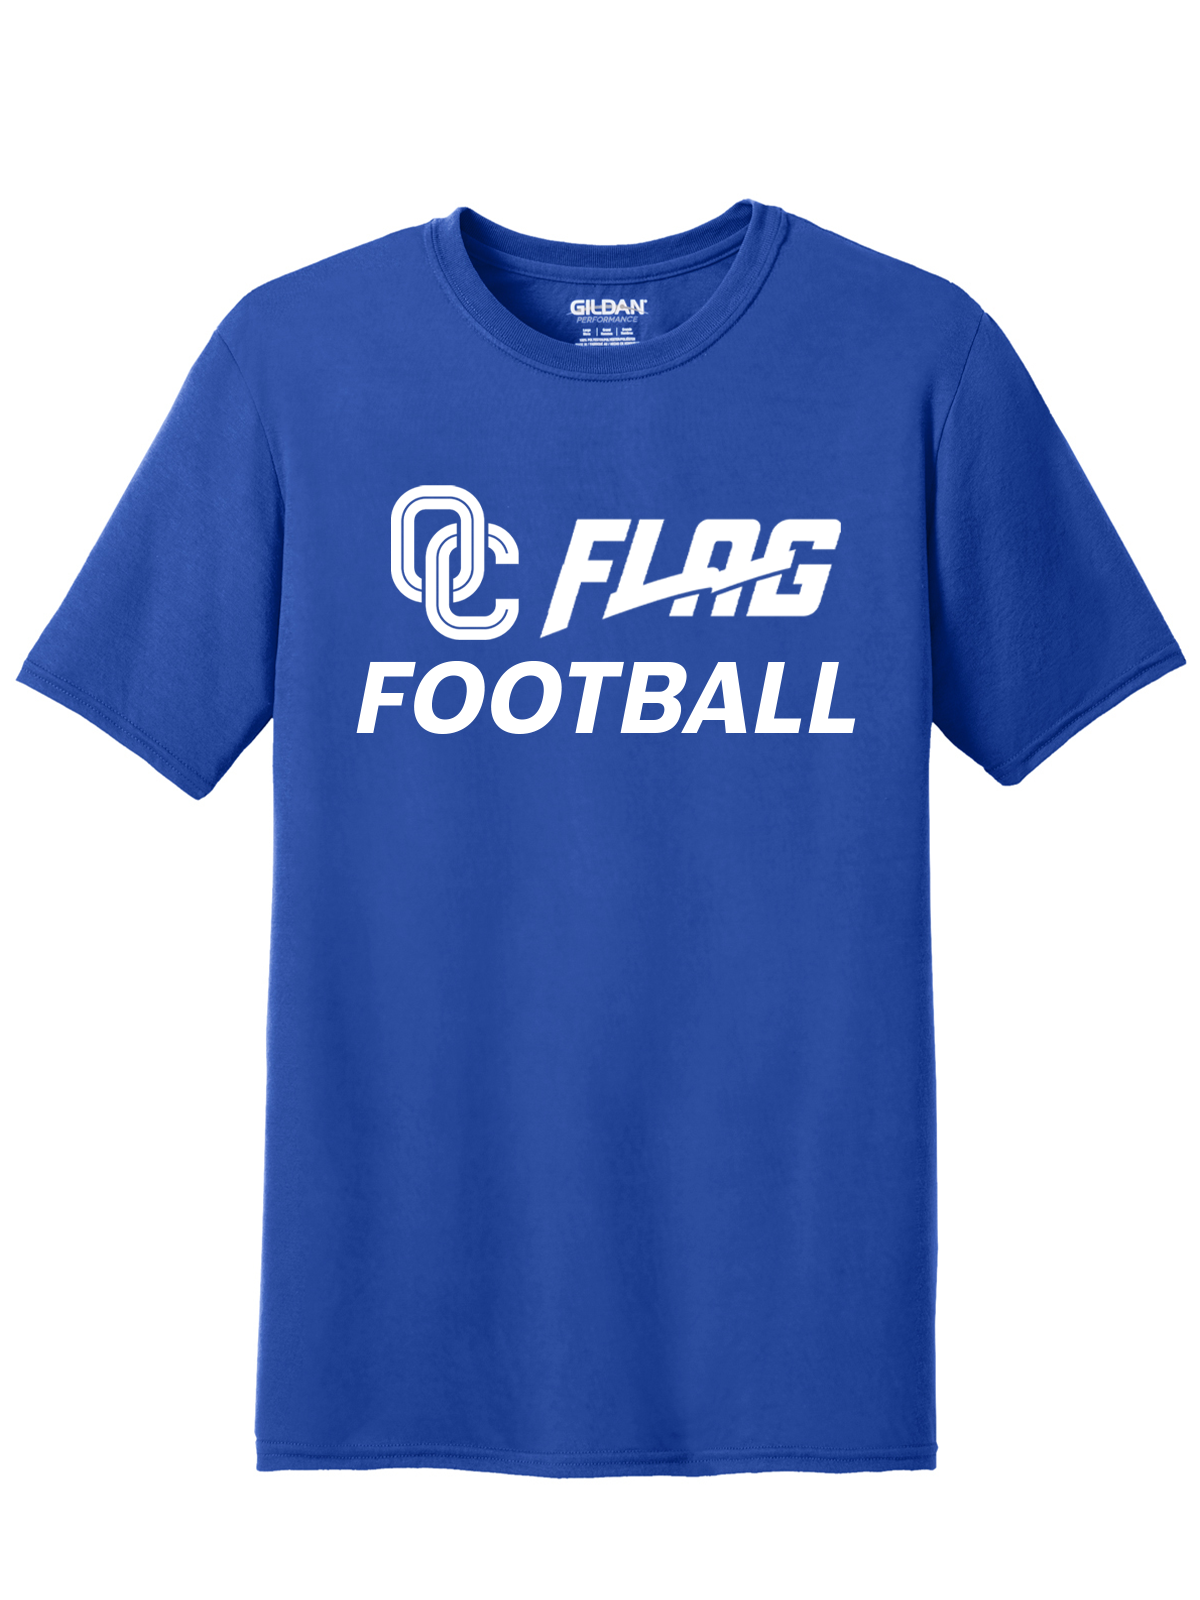 OC Flag Football Custom Printed Shirt